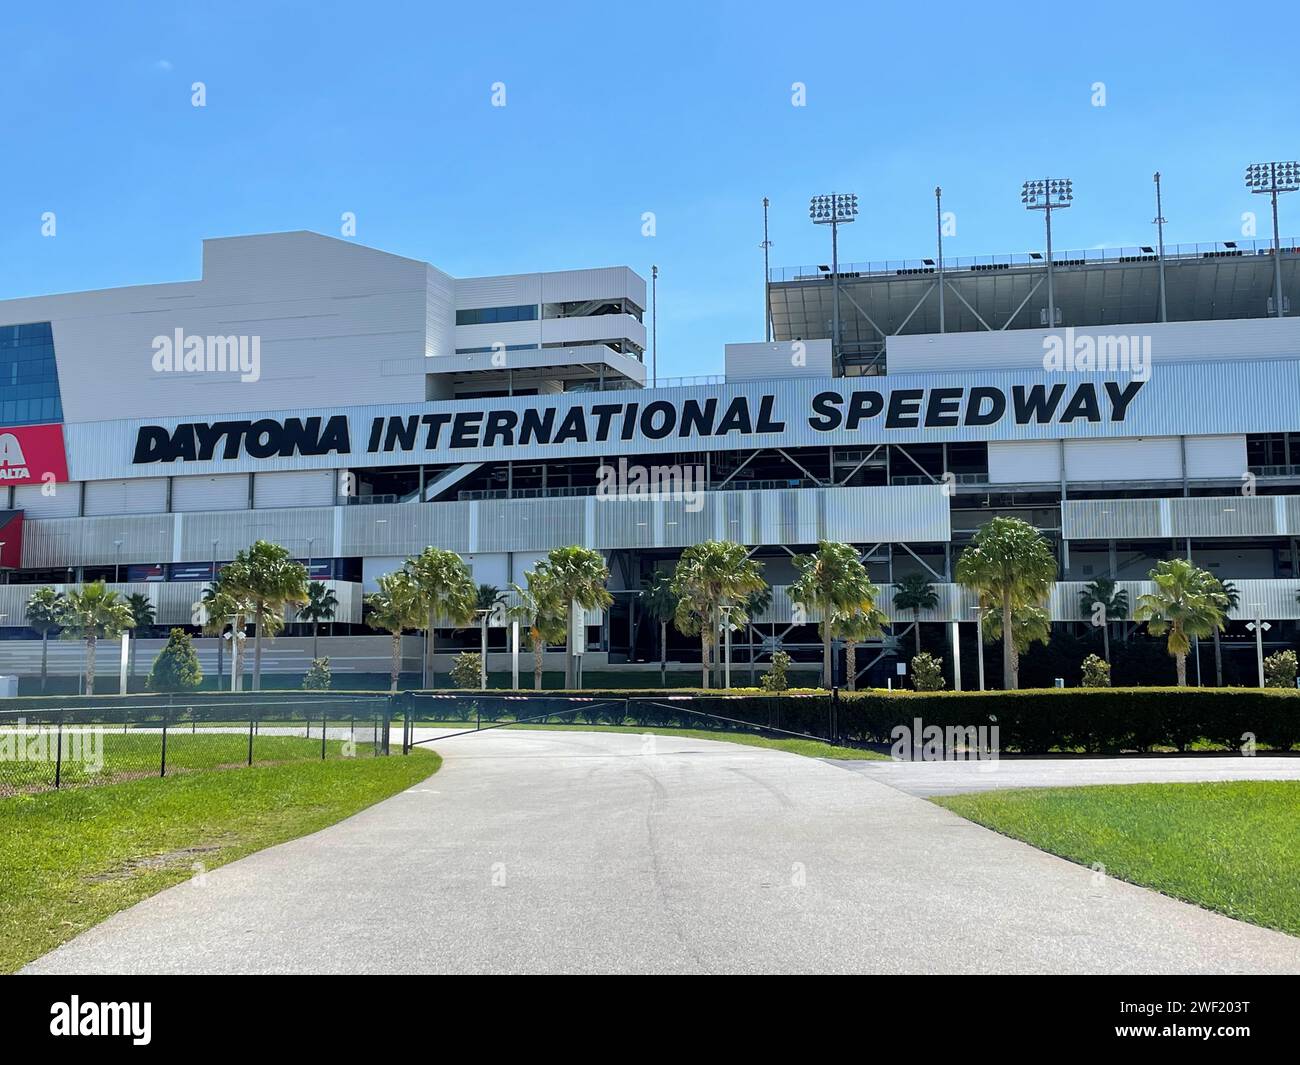 The walkway leading into the Daytona International Speedway visitors stands where NASCAR holds the Daytona 500 stockcar race. Stock Photo